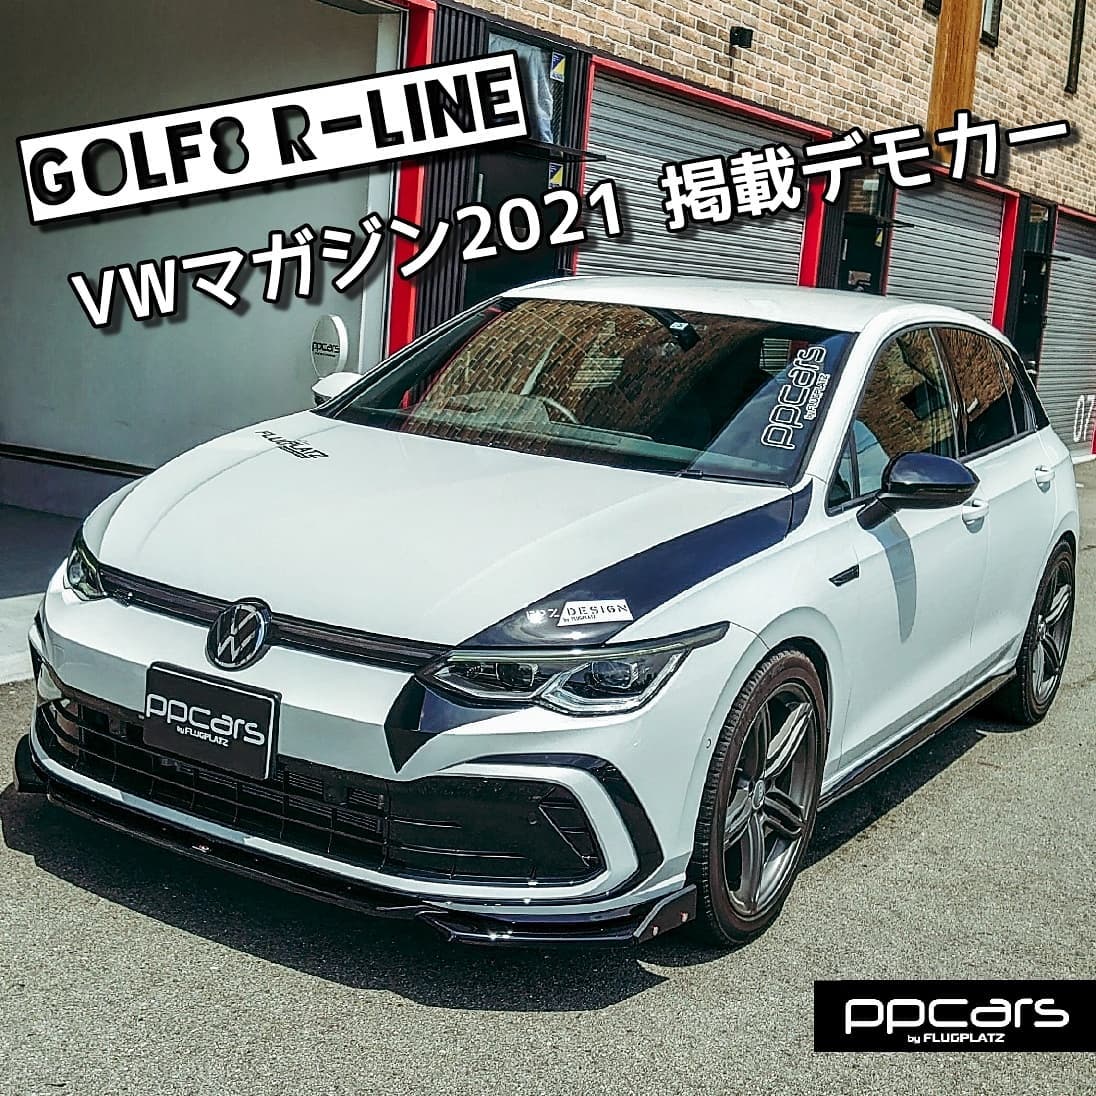 Golf8 (5H) R-Line 〜VWマガジン2021掲載デモカー①